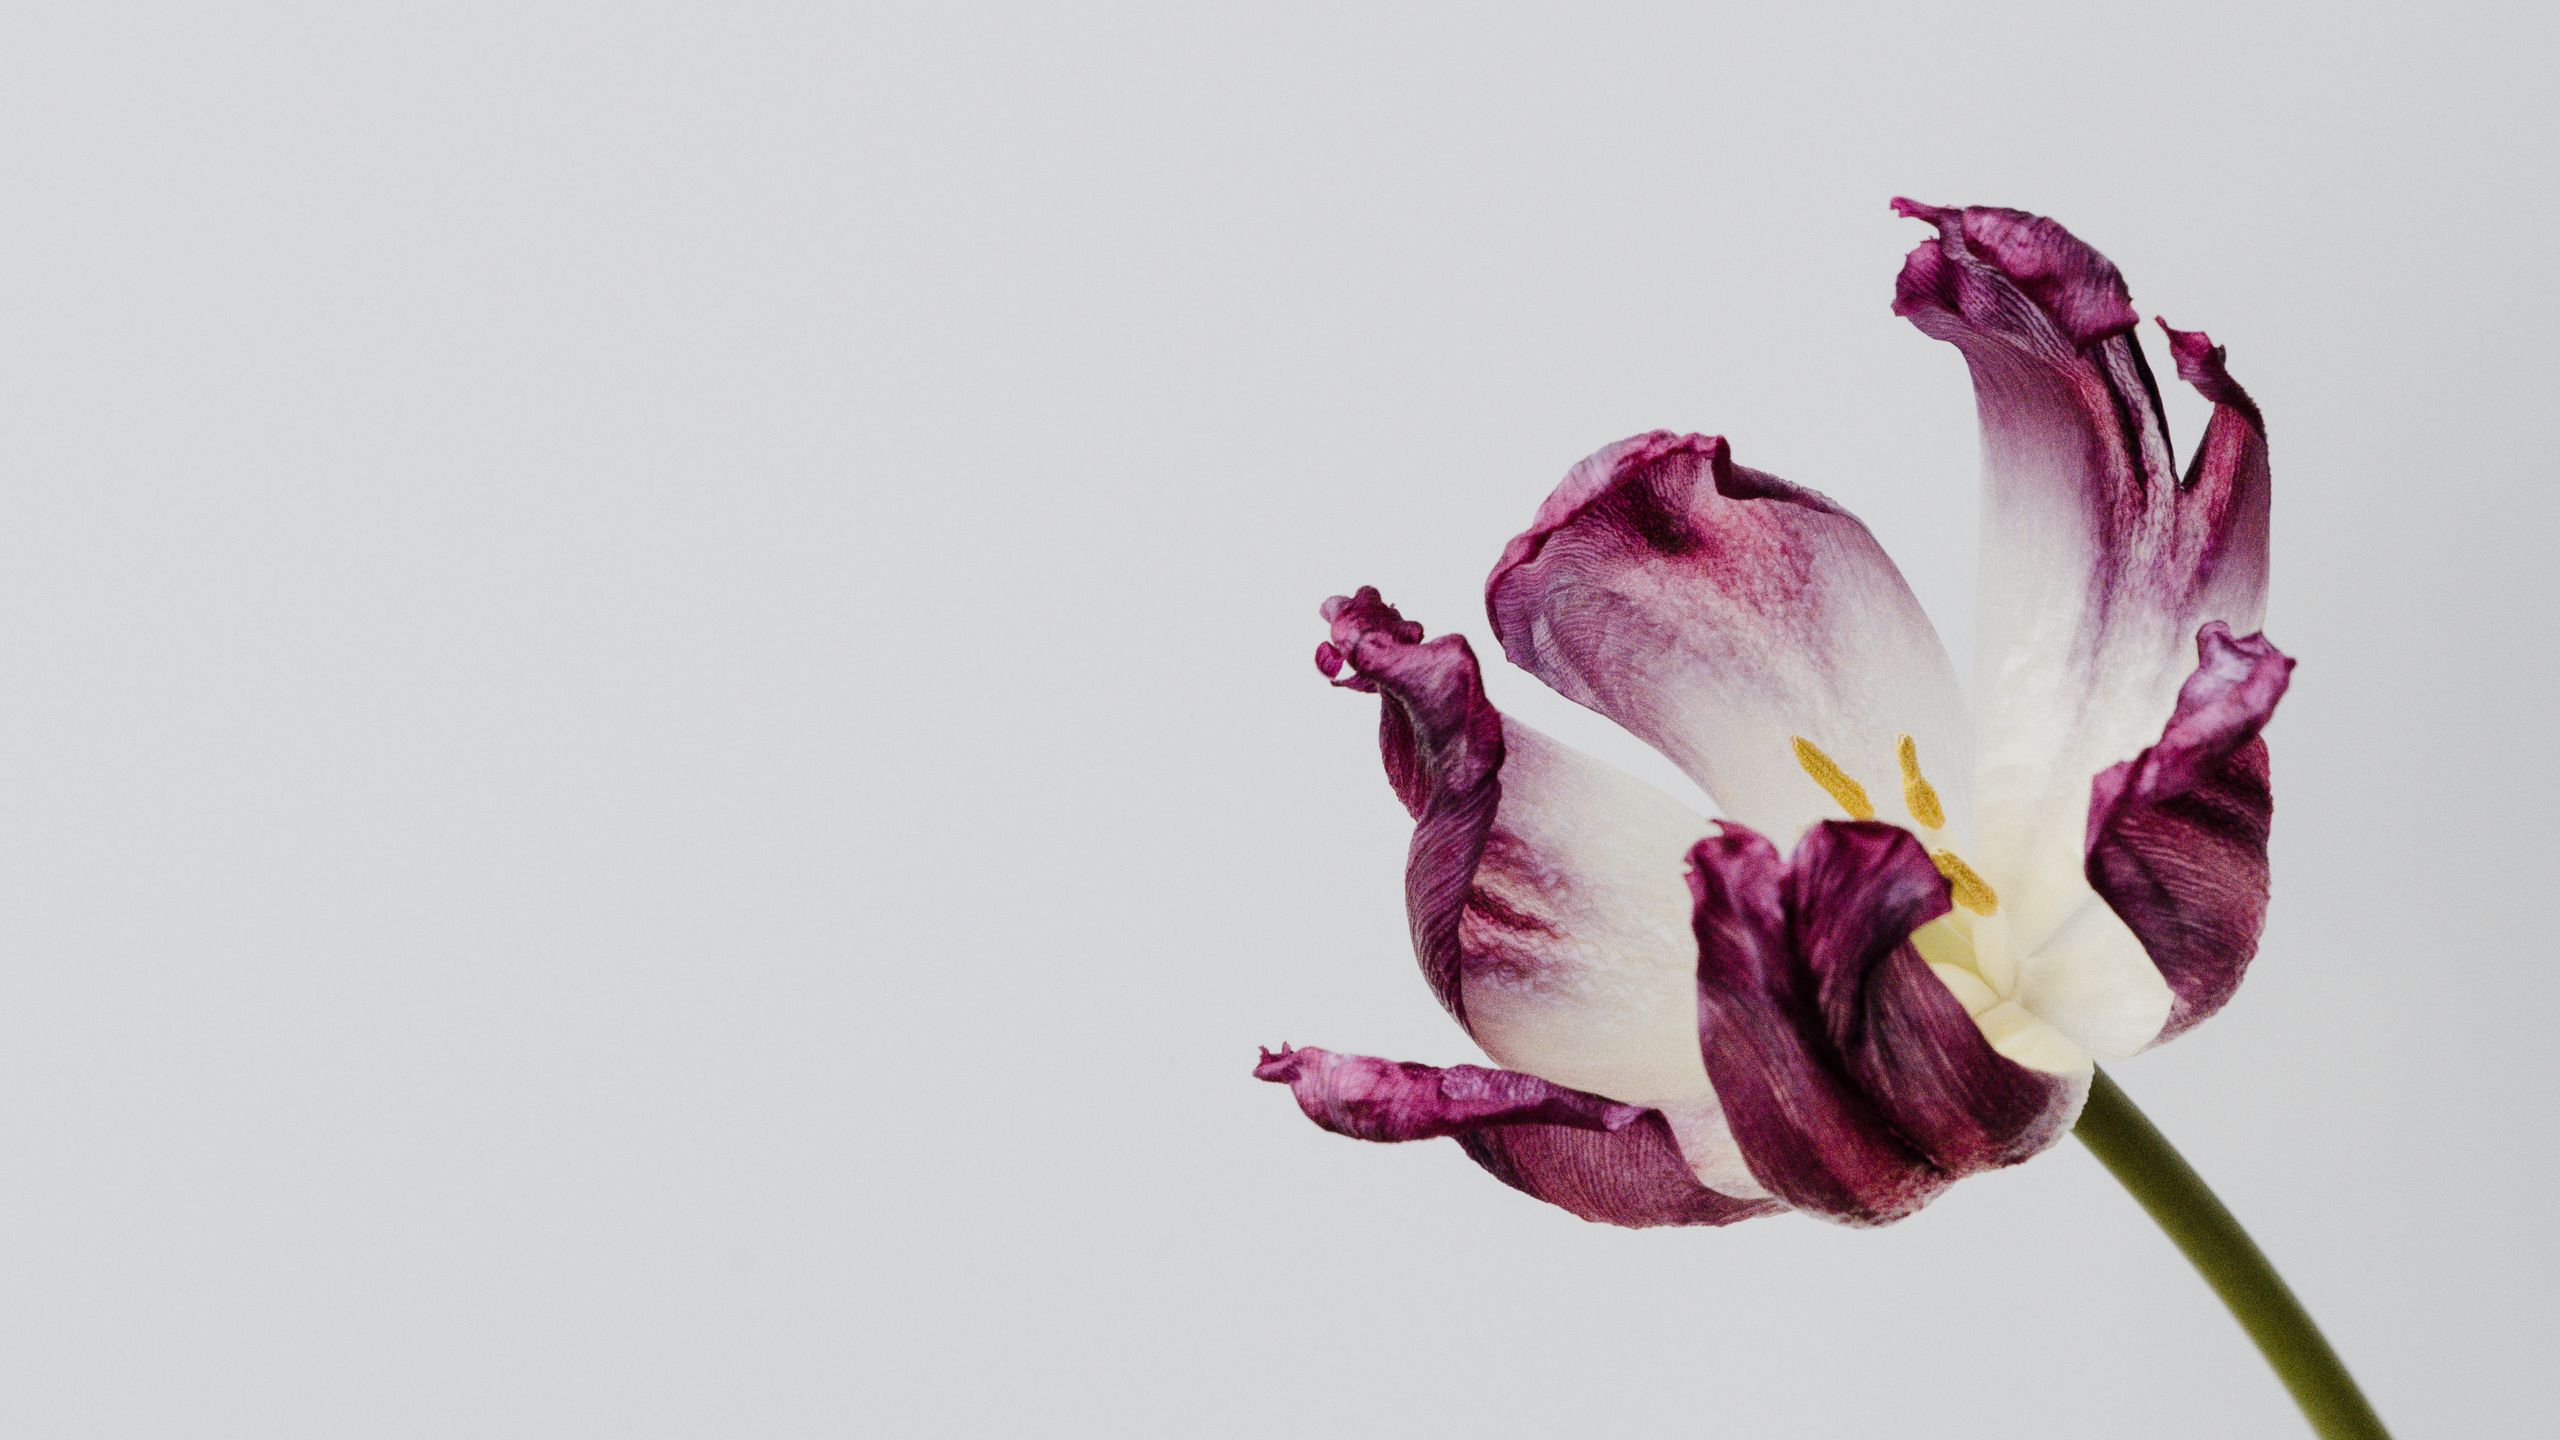 Download wallpaper 2560x1440 tulip, flower, minimalism widescreen 16:9 hd  background